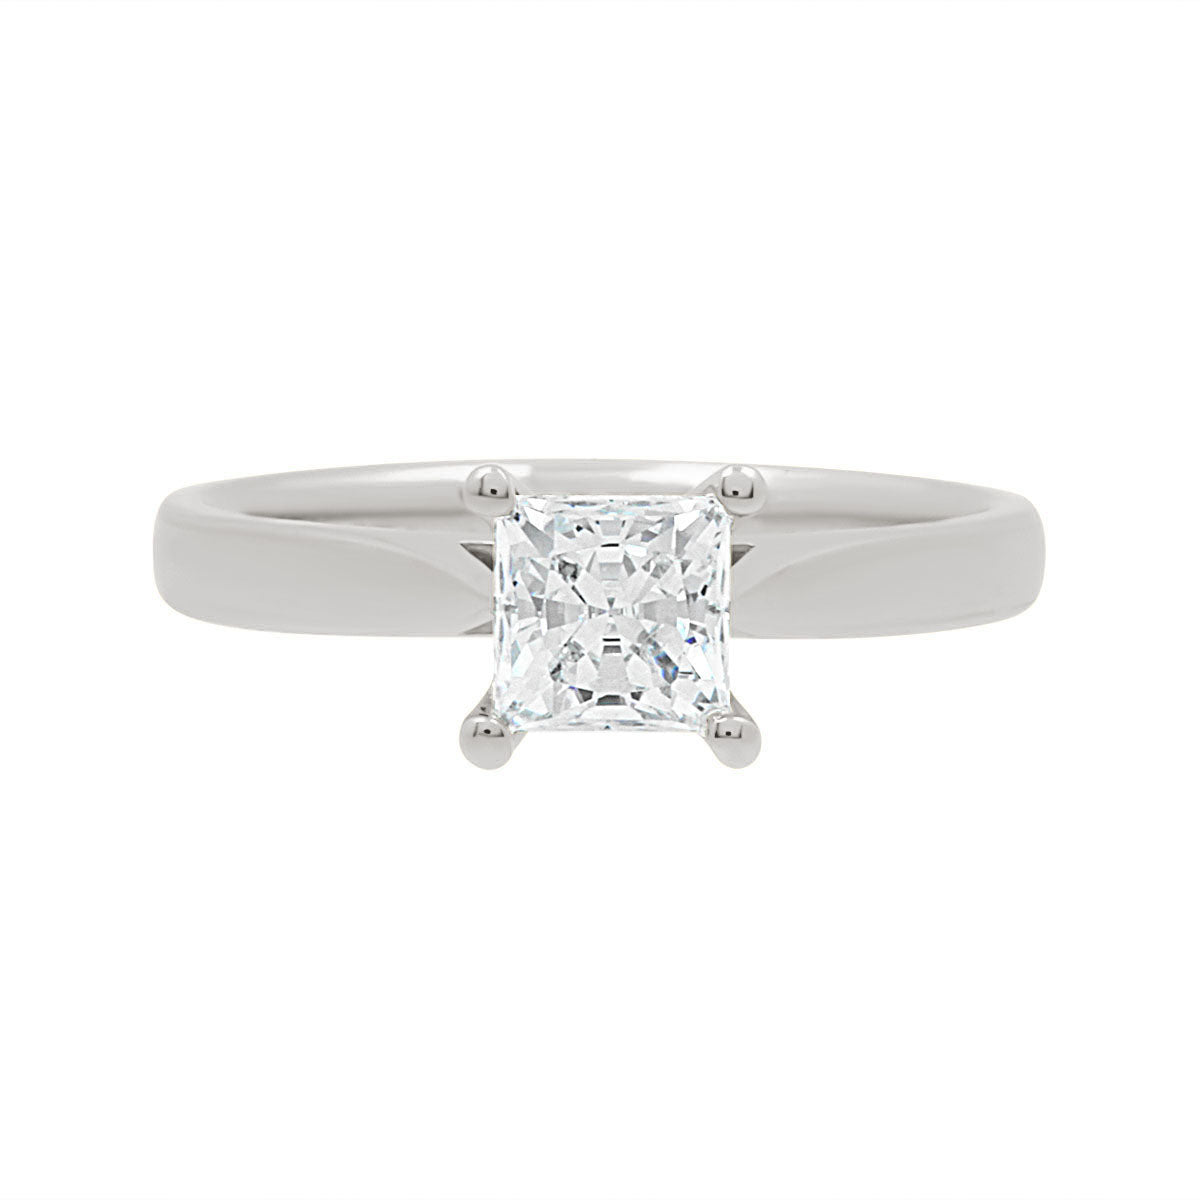 Princess Cut Diamond Ring in white gold